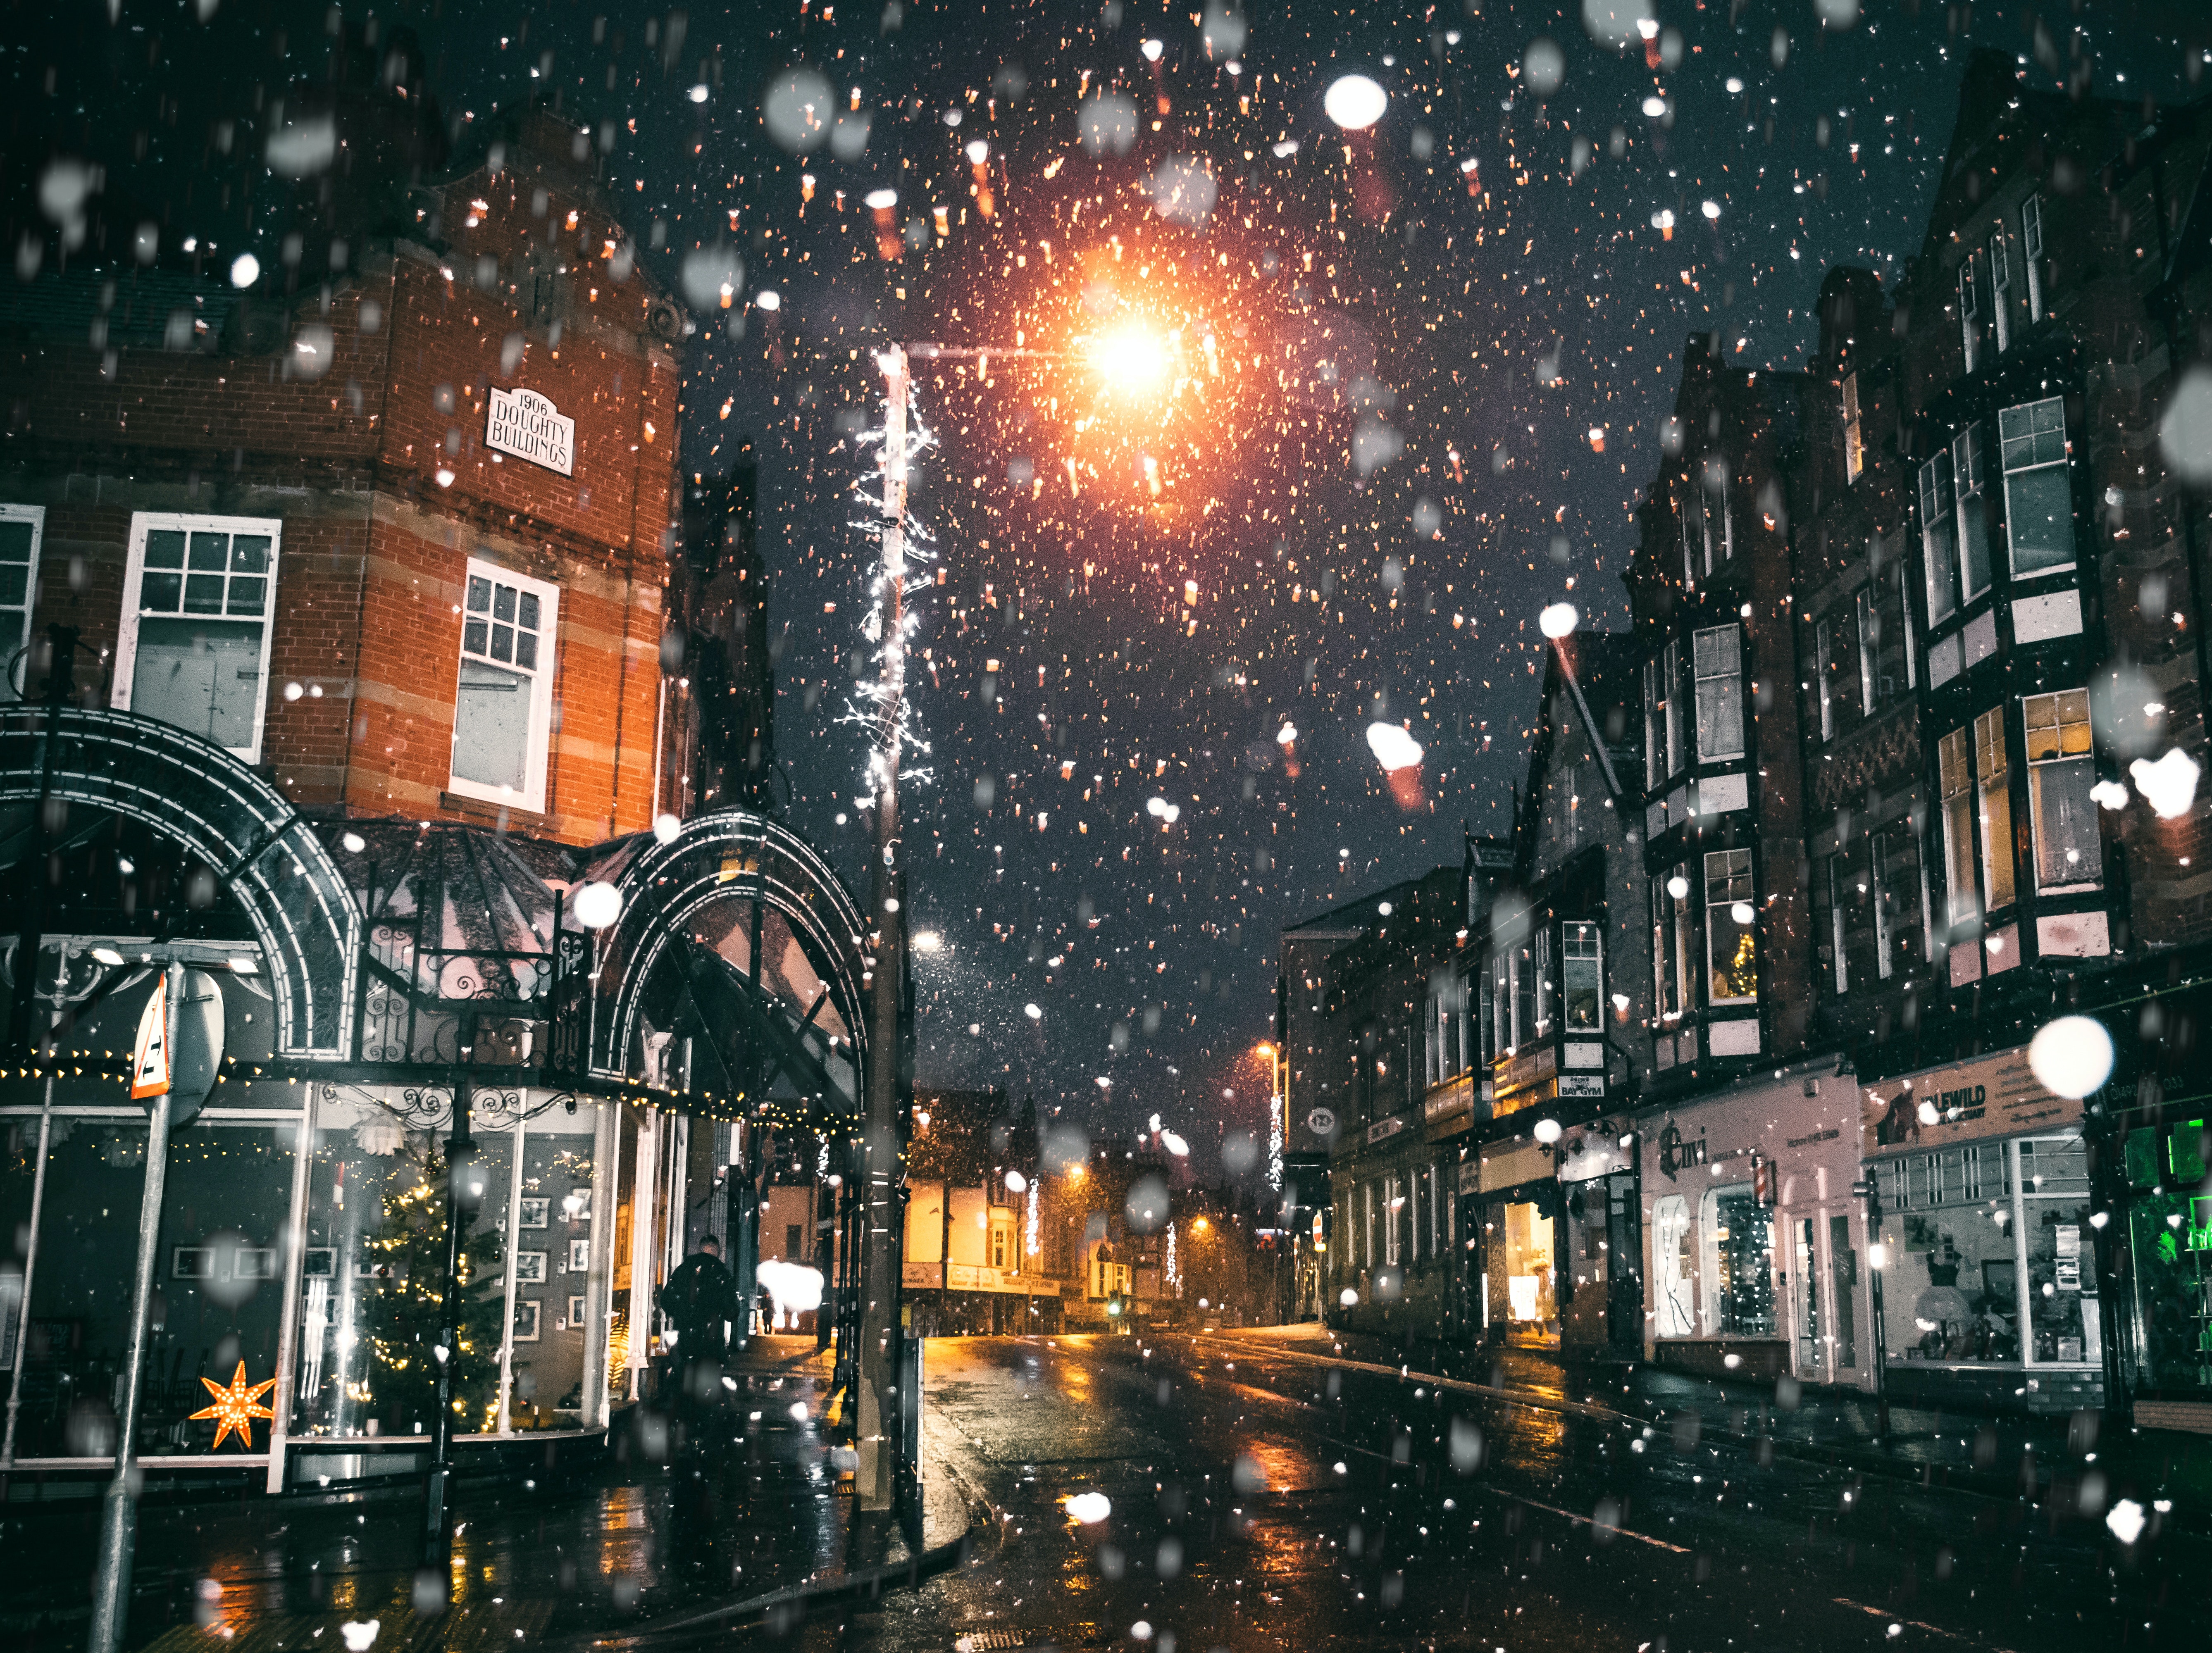 Best Snow Photo · 100% Free Downloads